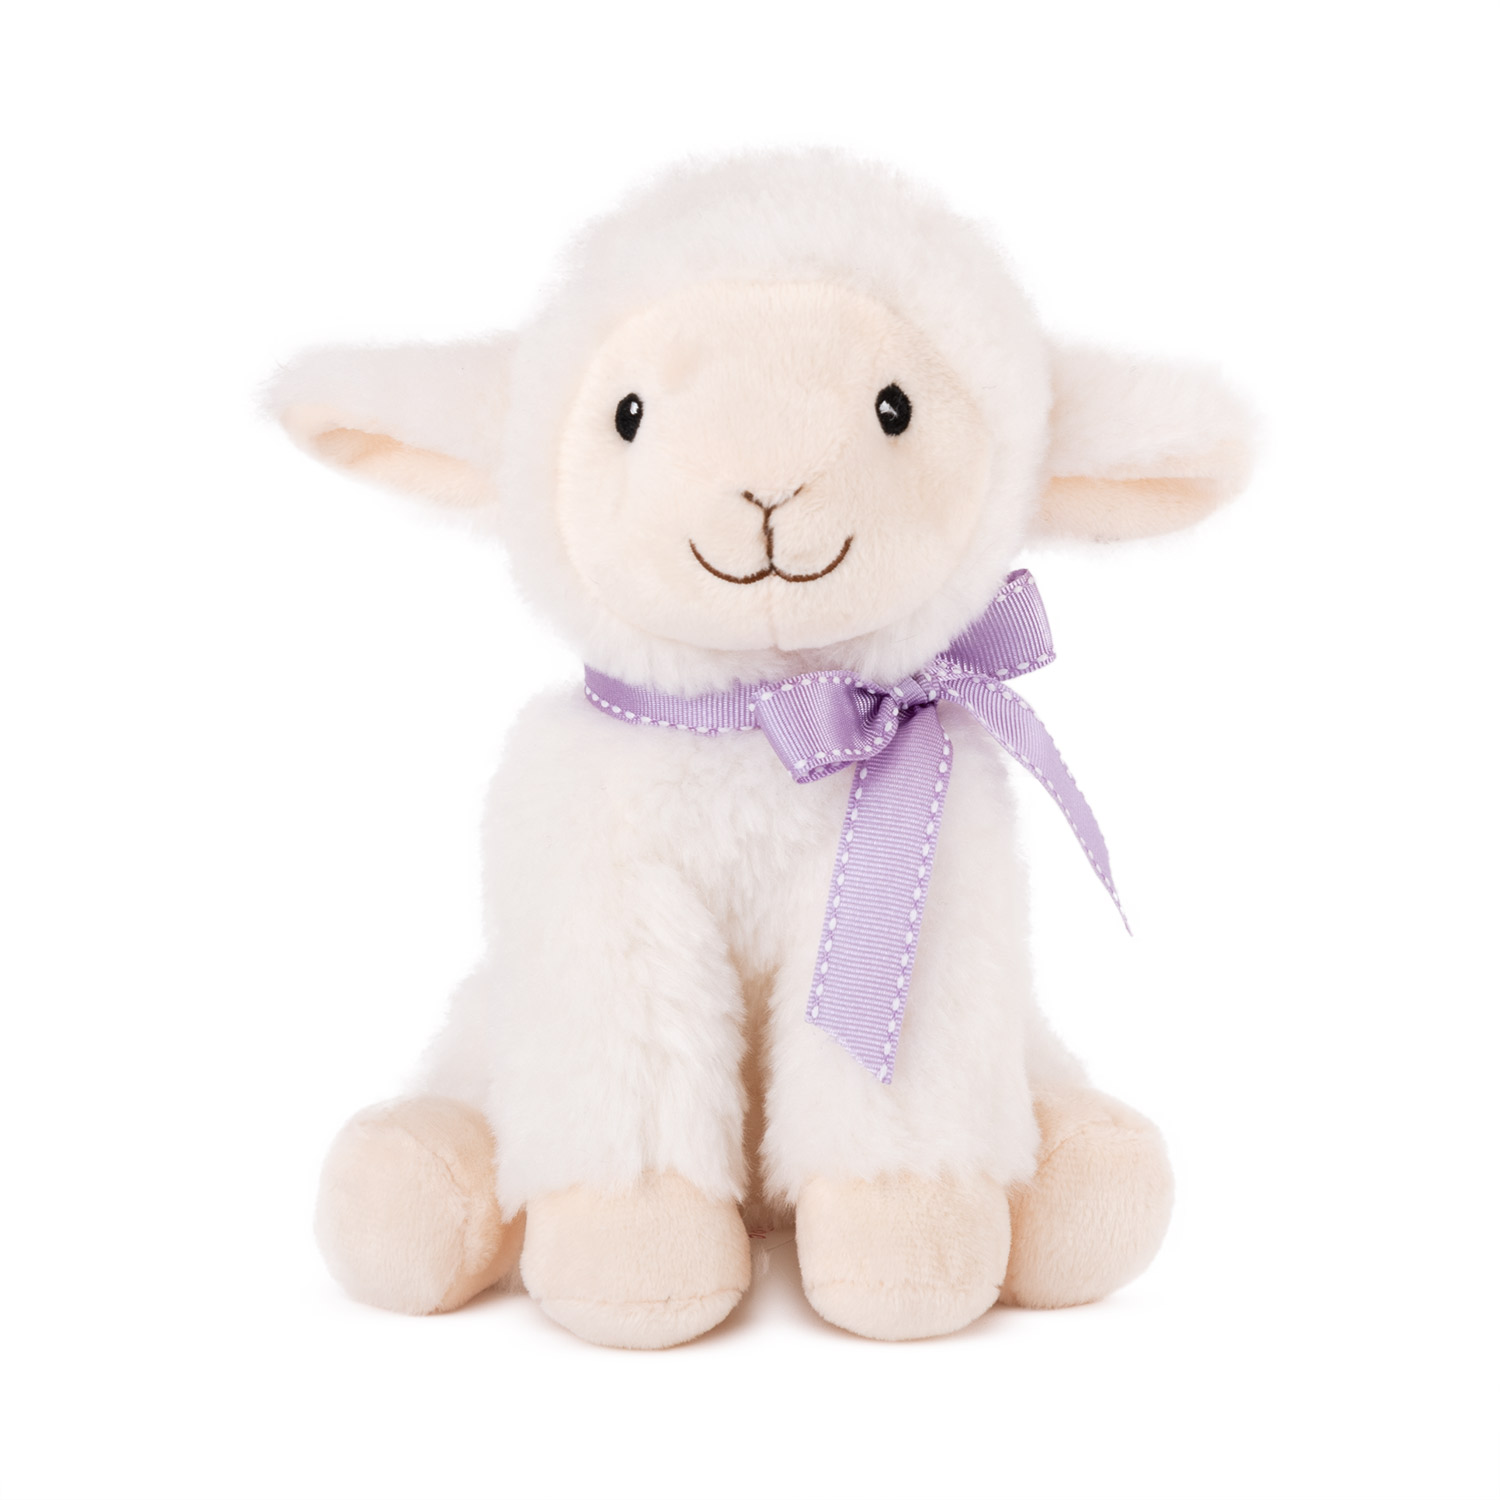 Sheep with purple ribbon